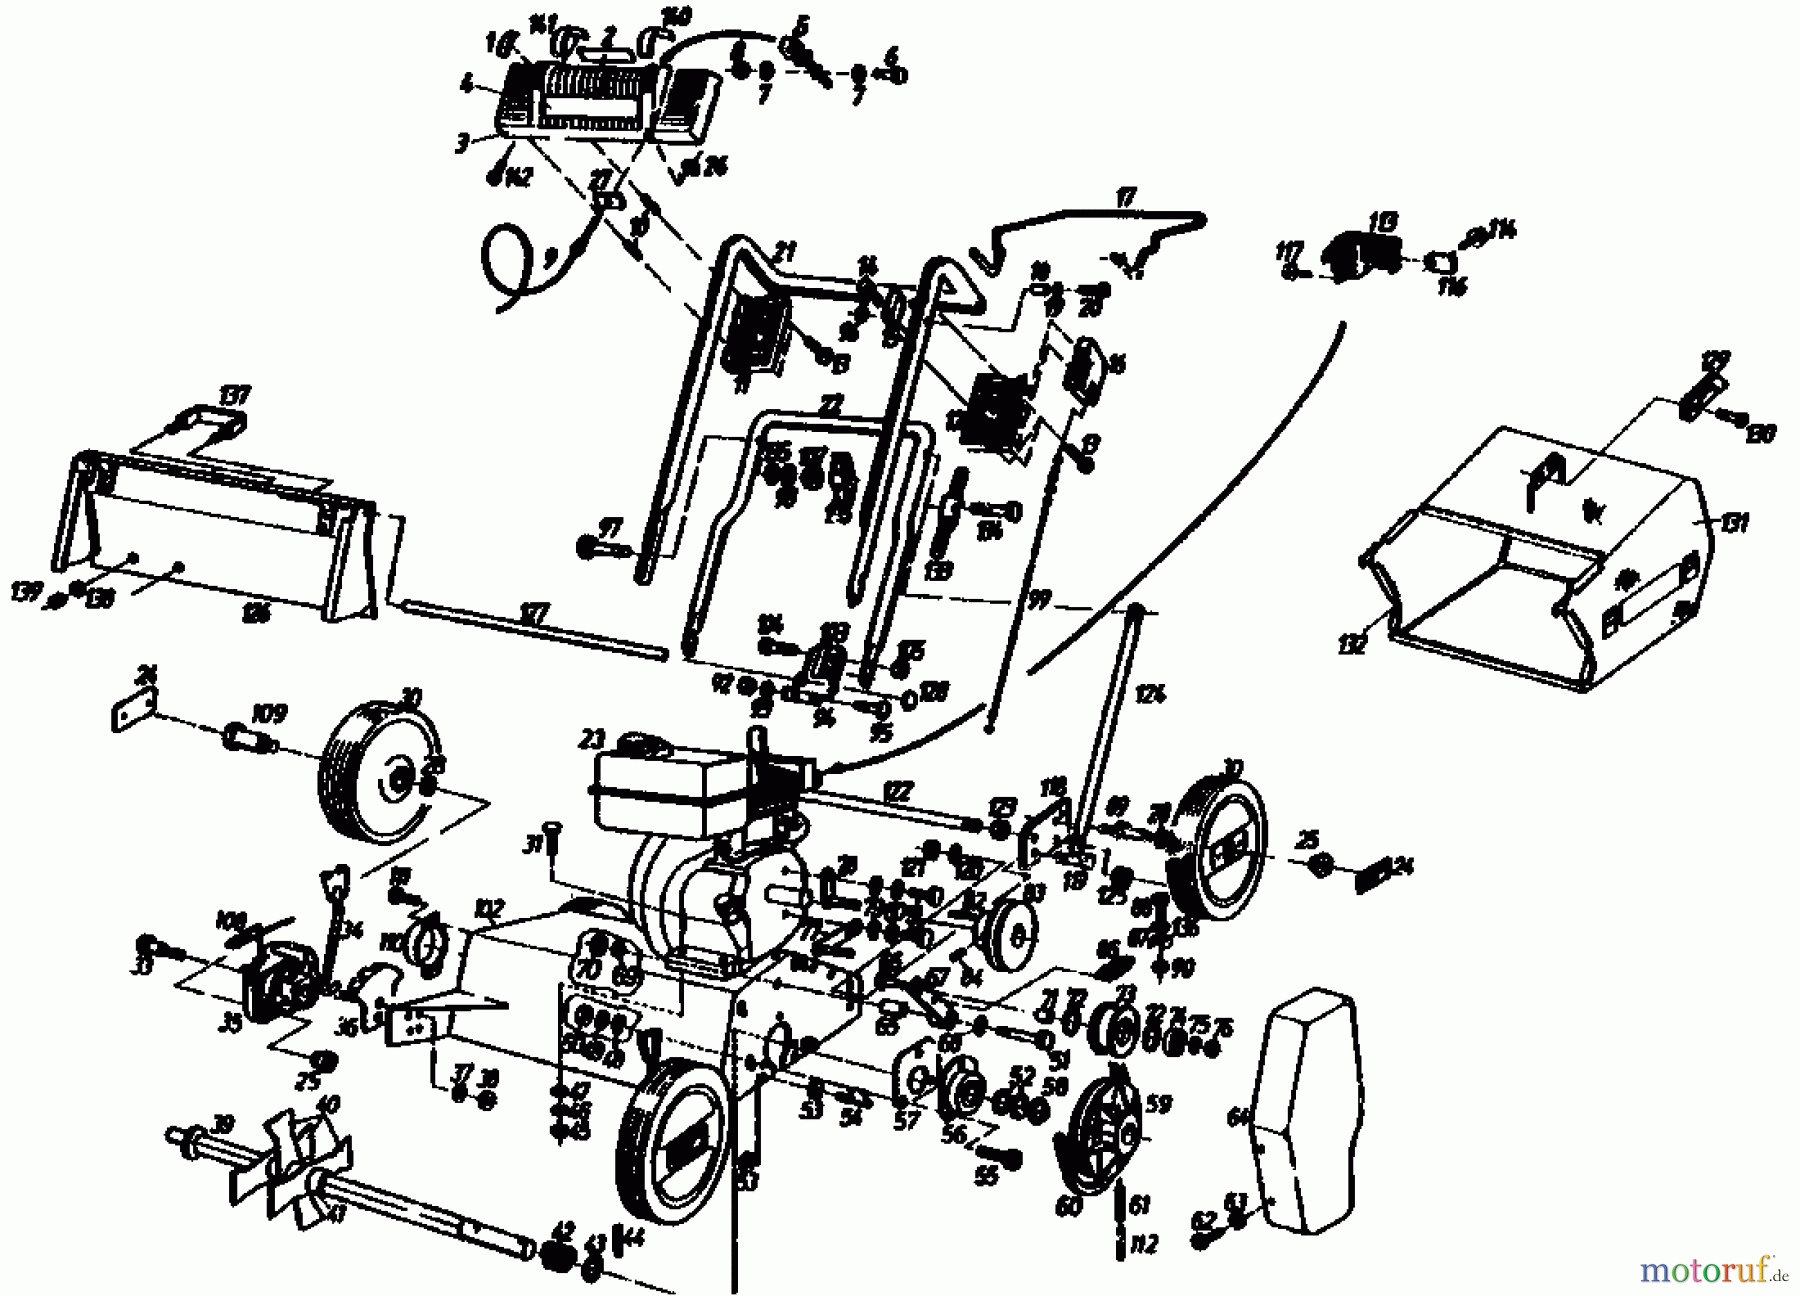  Gutbrod Petrol verticutter MV 404 04010.01  (1991) Basic machine